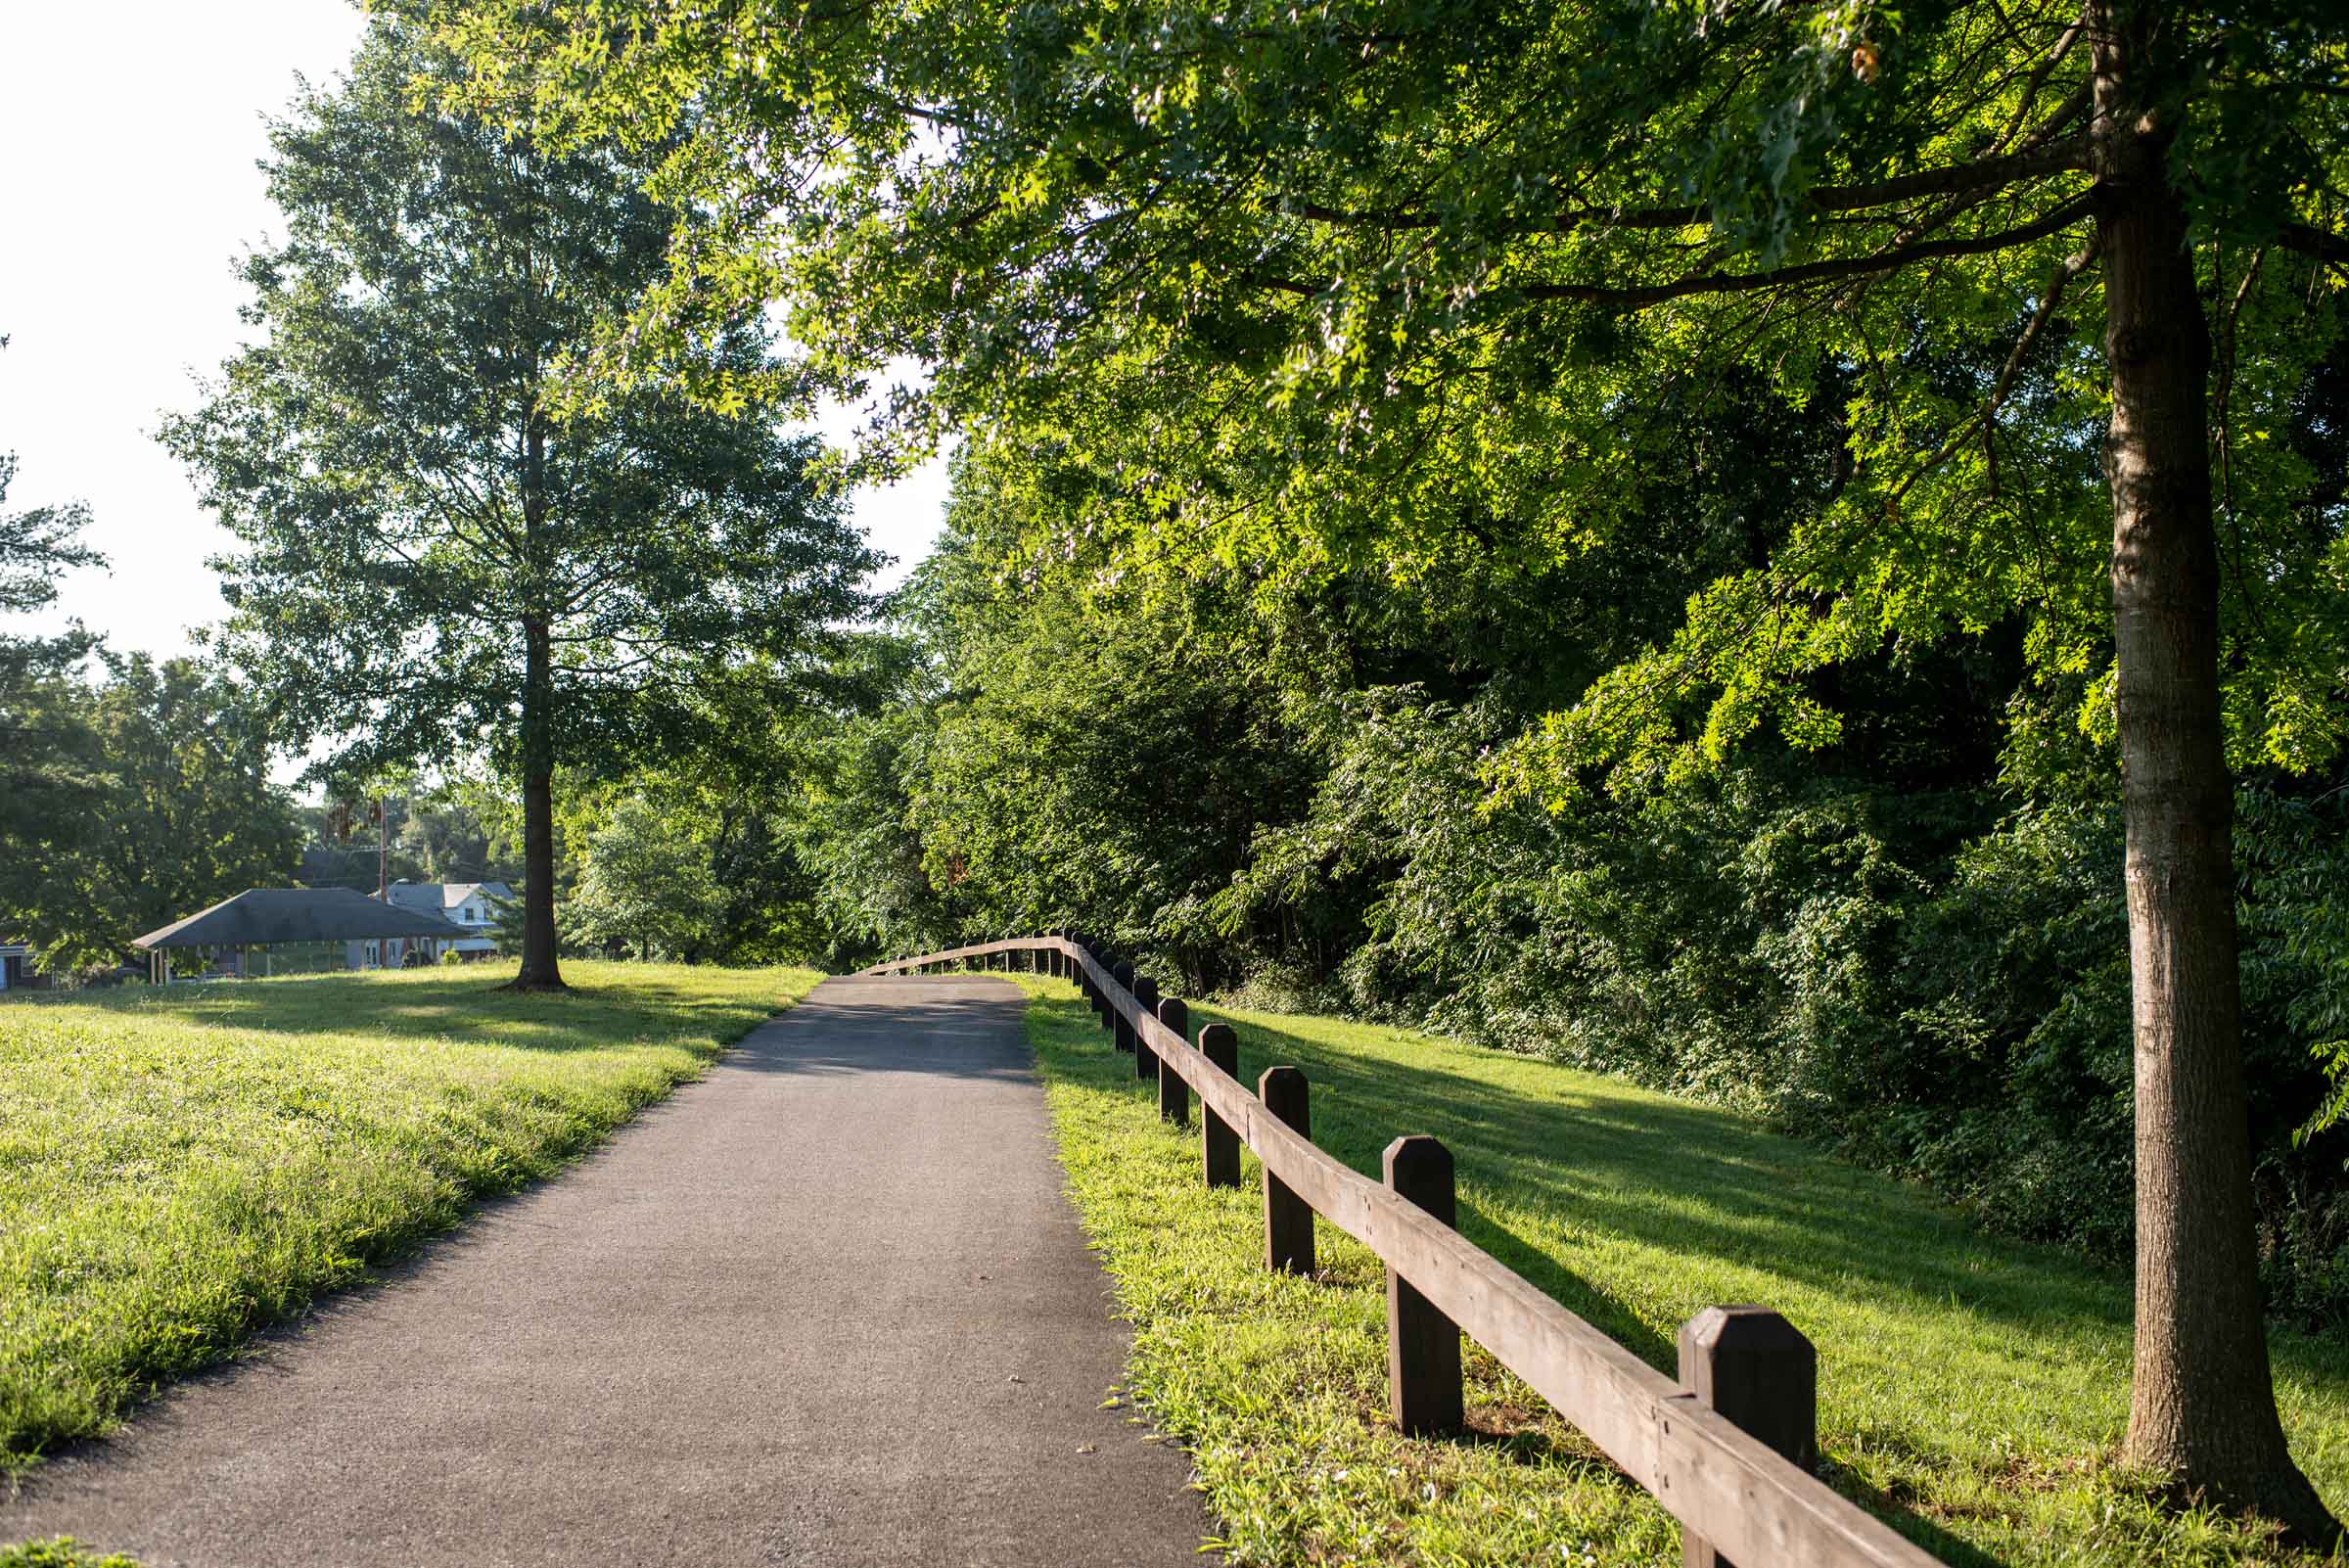 Lick Run Greenway in Washington Park Roanoke